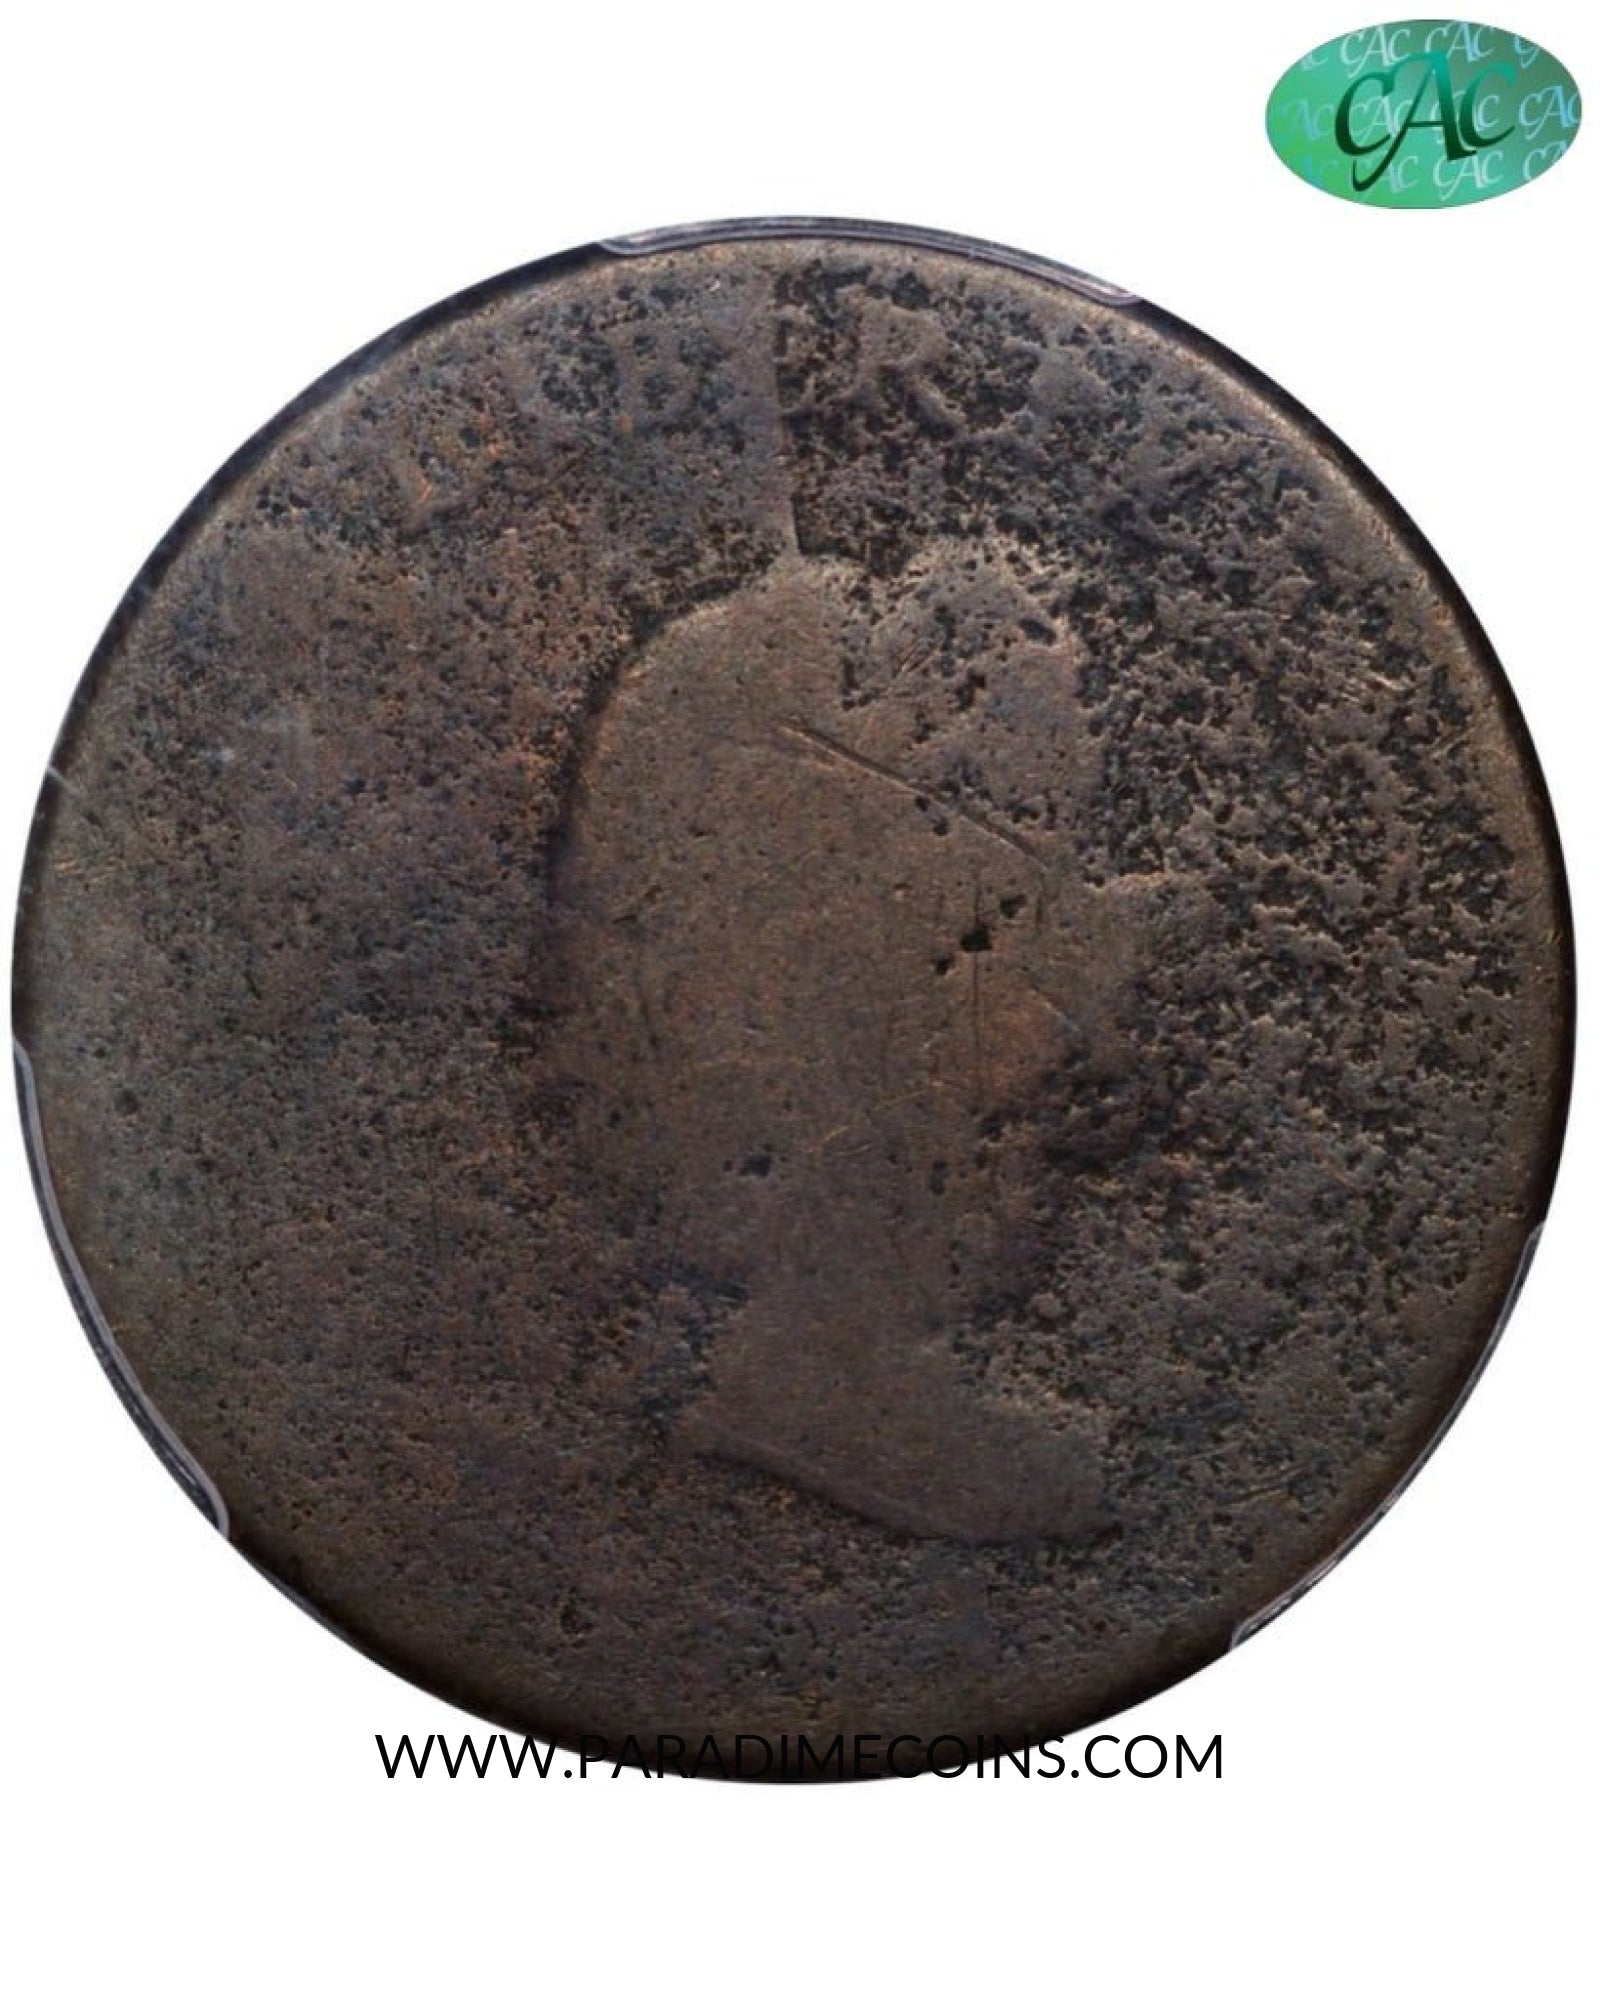 1793 1C Liberty CAP P01 PCGS - Paradime Coins | PCGS NGC CACG CAC Rare US Numismatic Coins For Sale